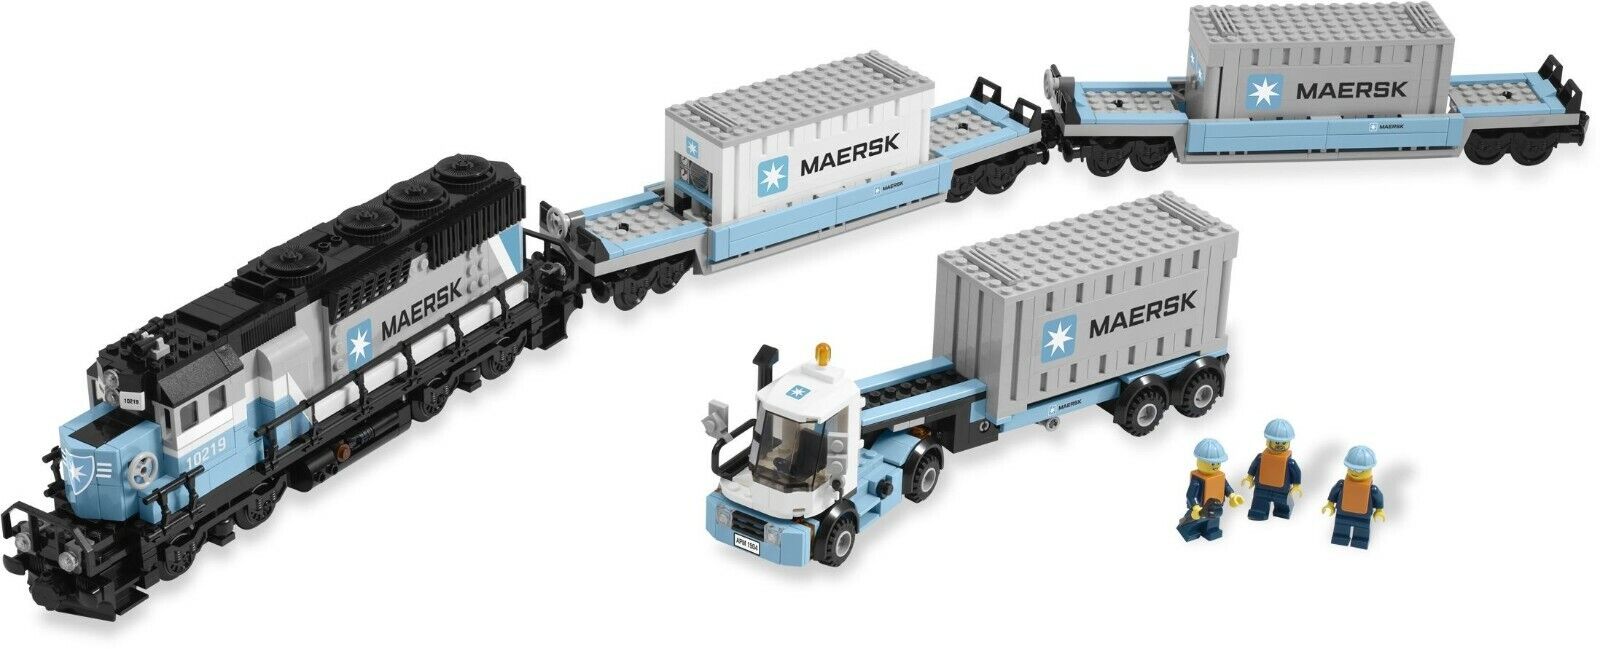 LEGO GENUINE Creator Expert 10219 Maersk Train RETIRED Trains BAGS NEW NO BOX